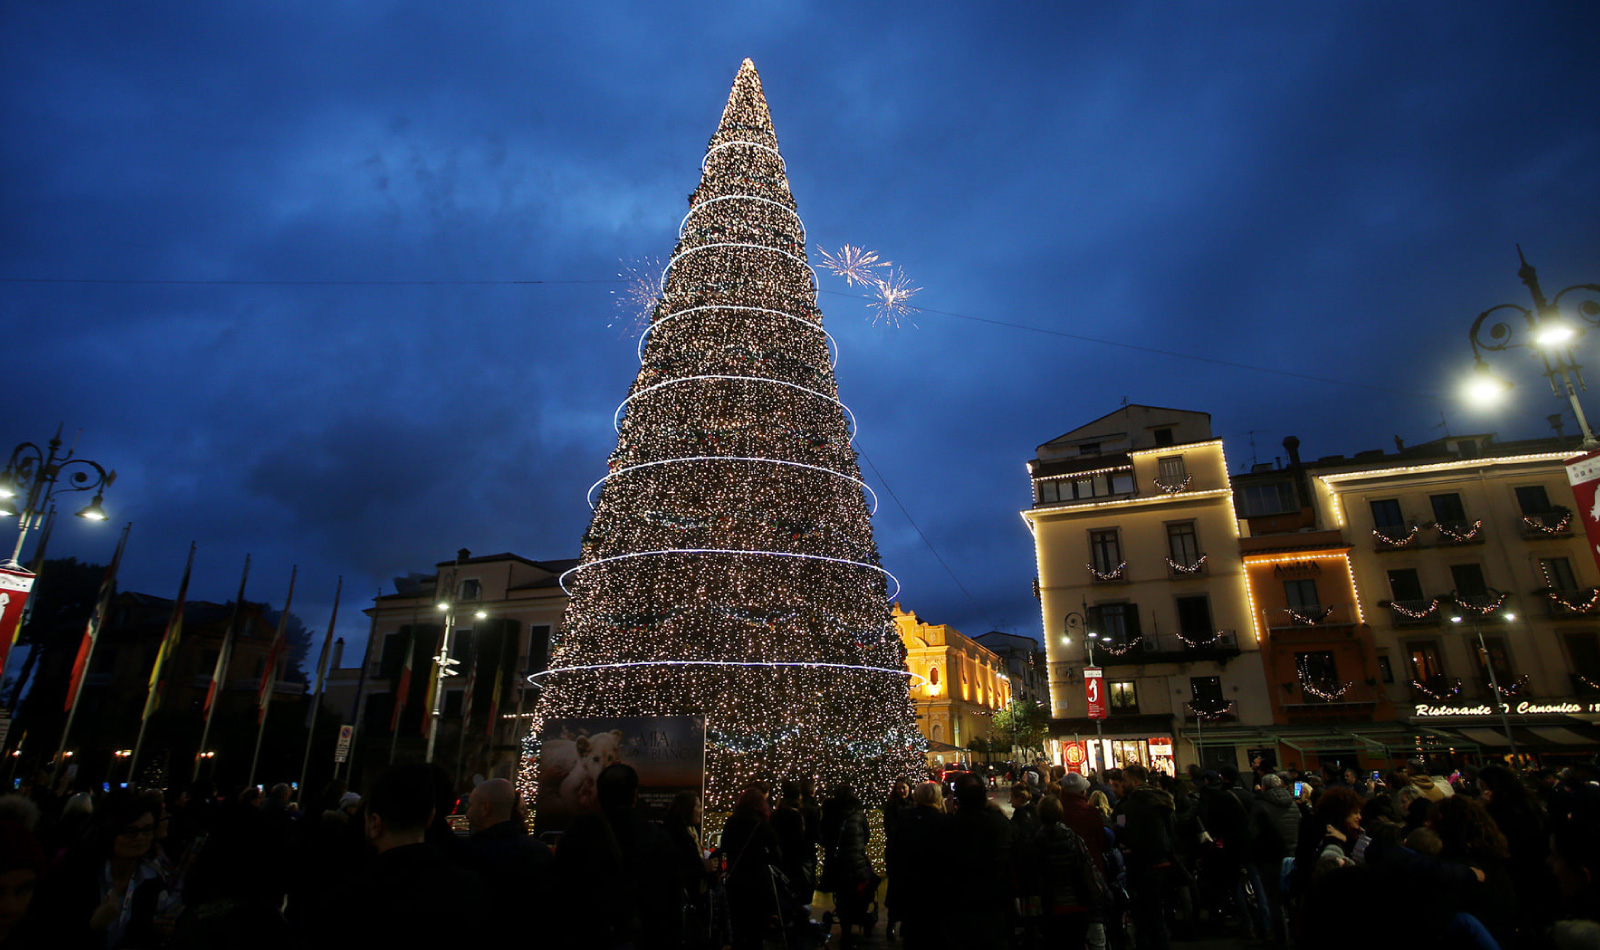 Christmas in Sorrento